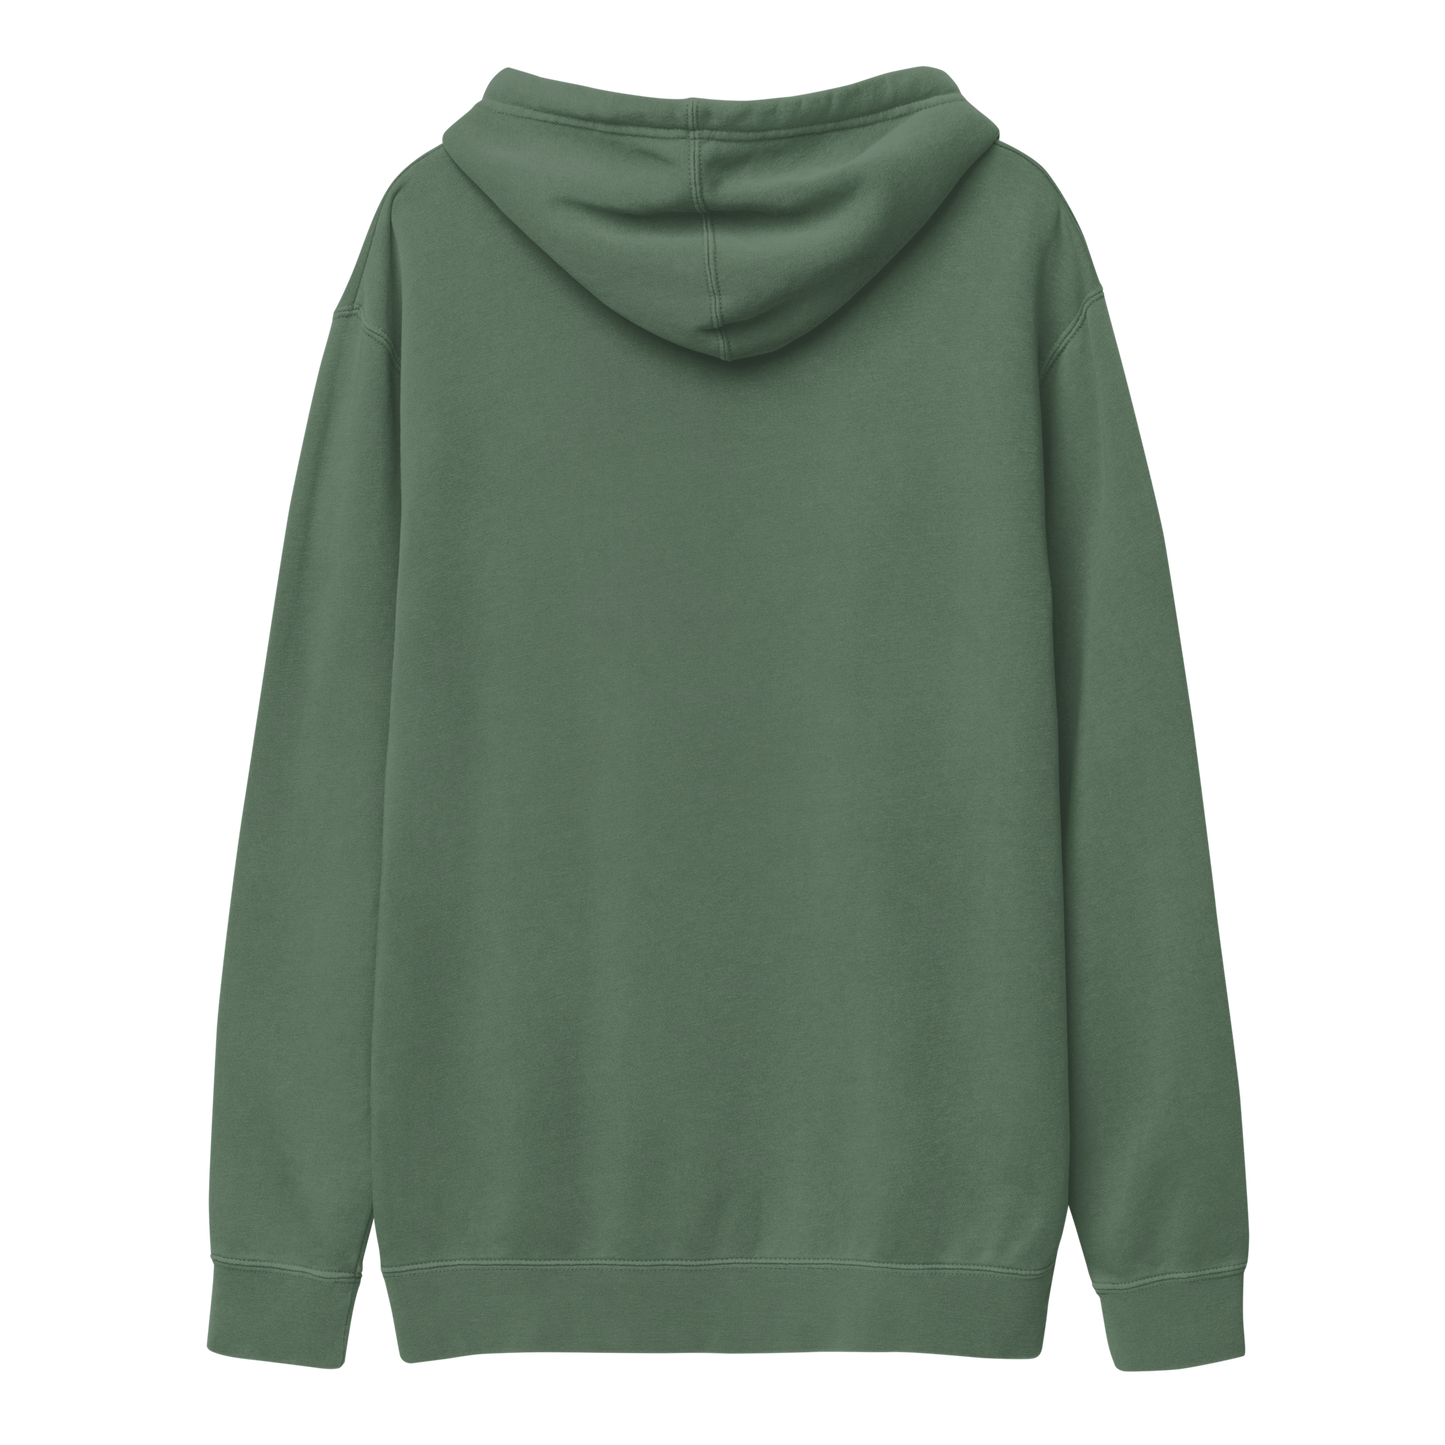 Flagstaff green comfy hoodie